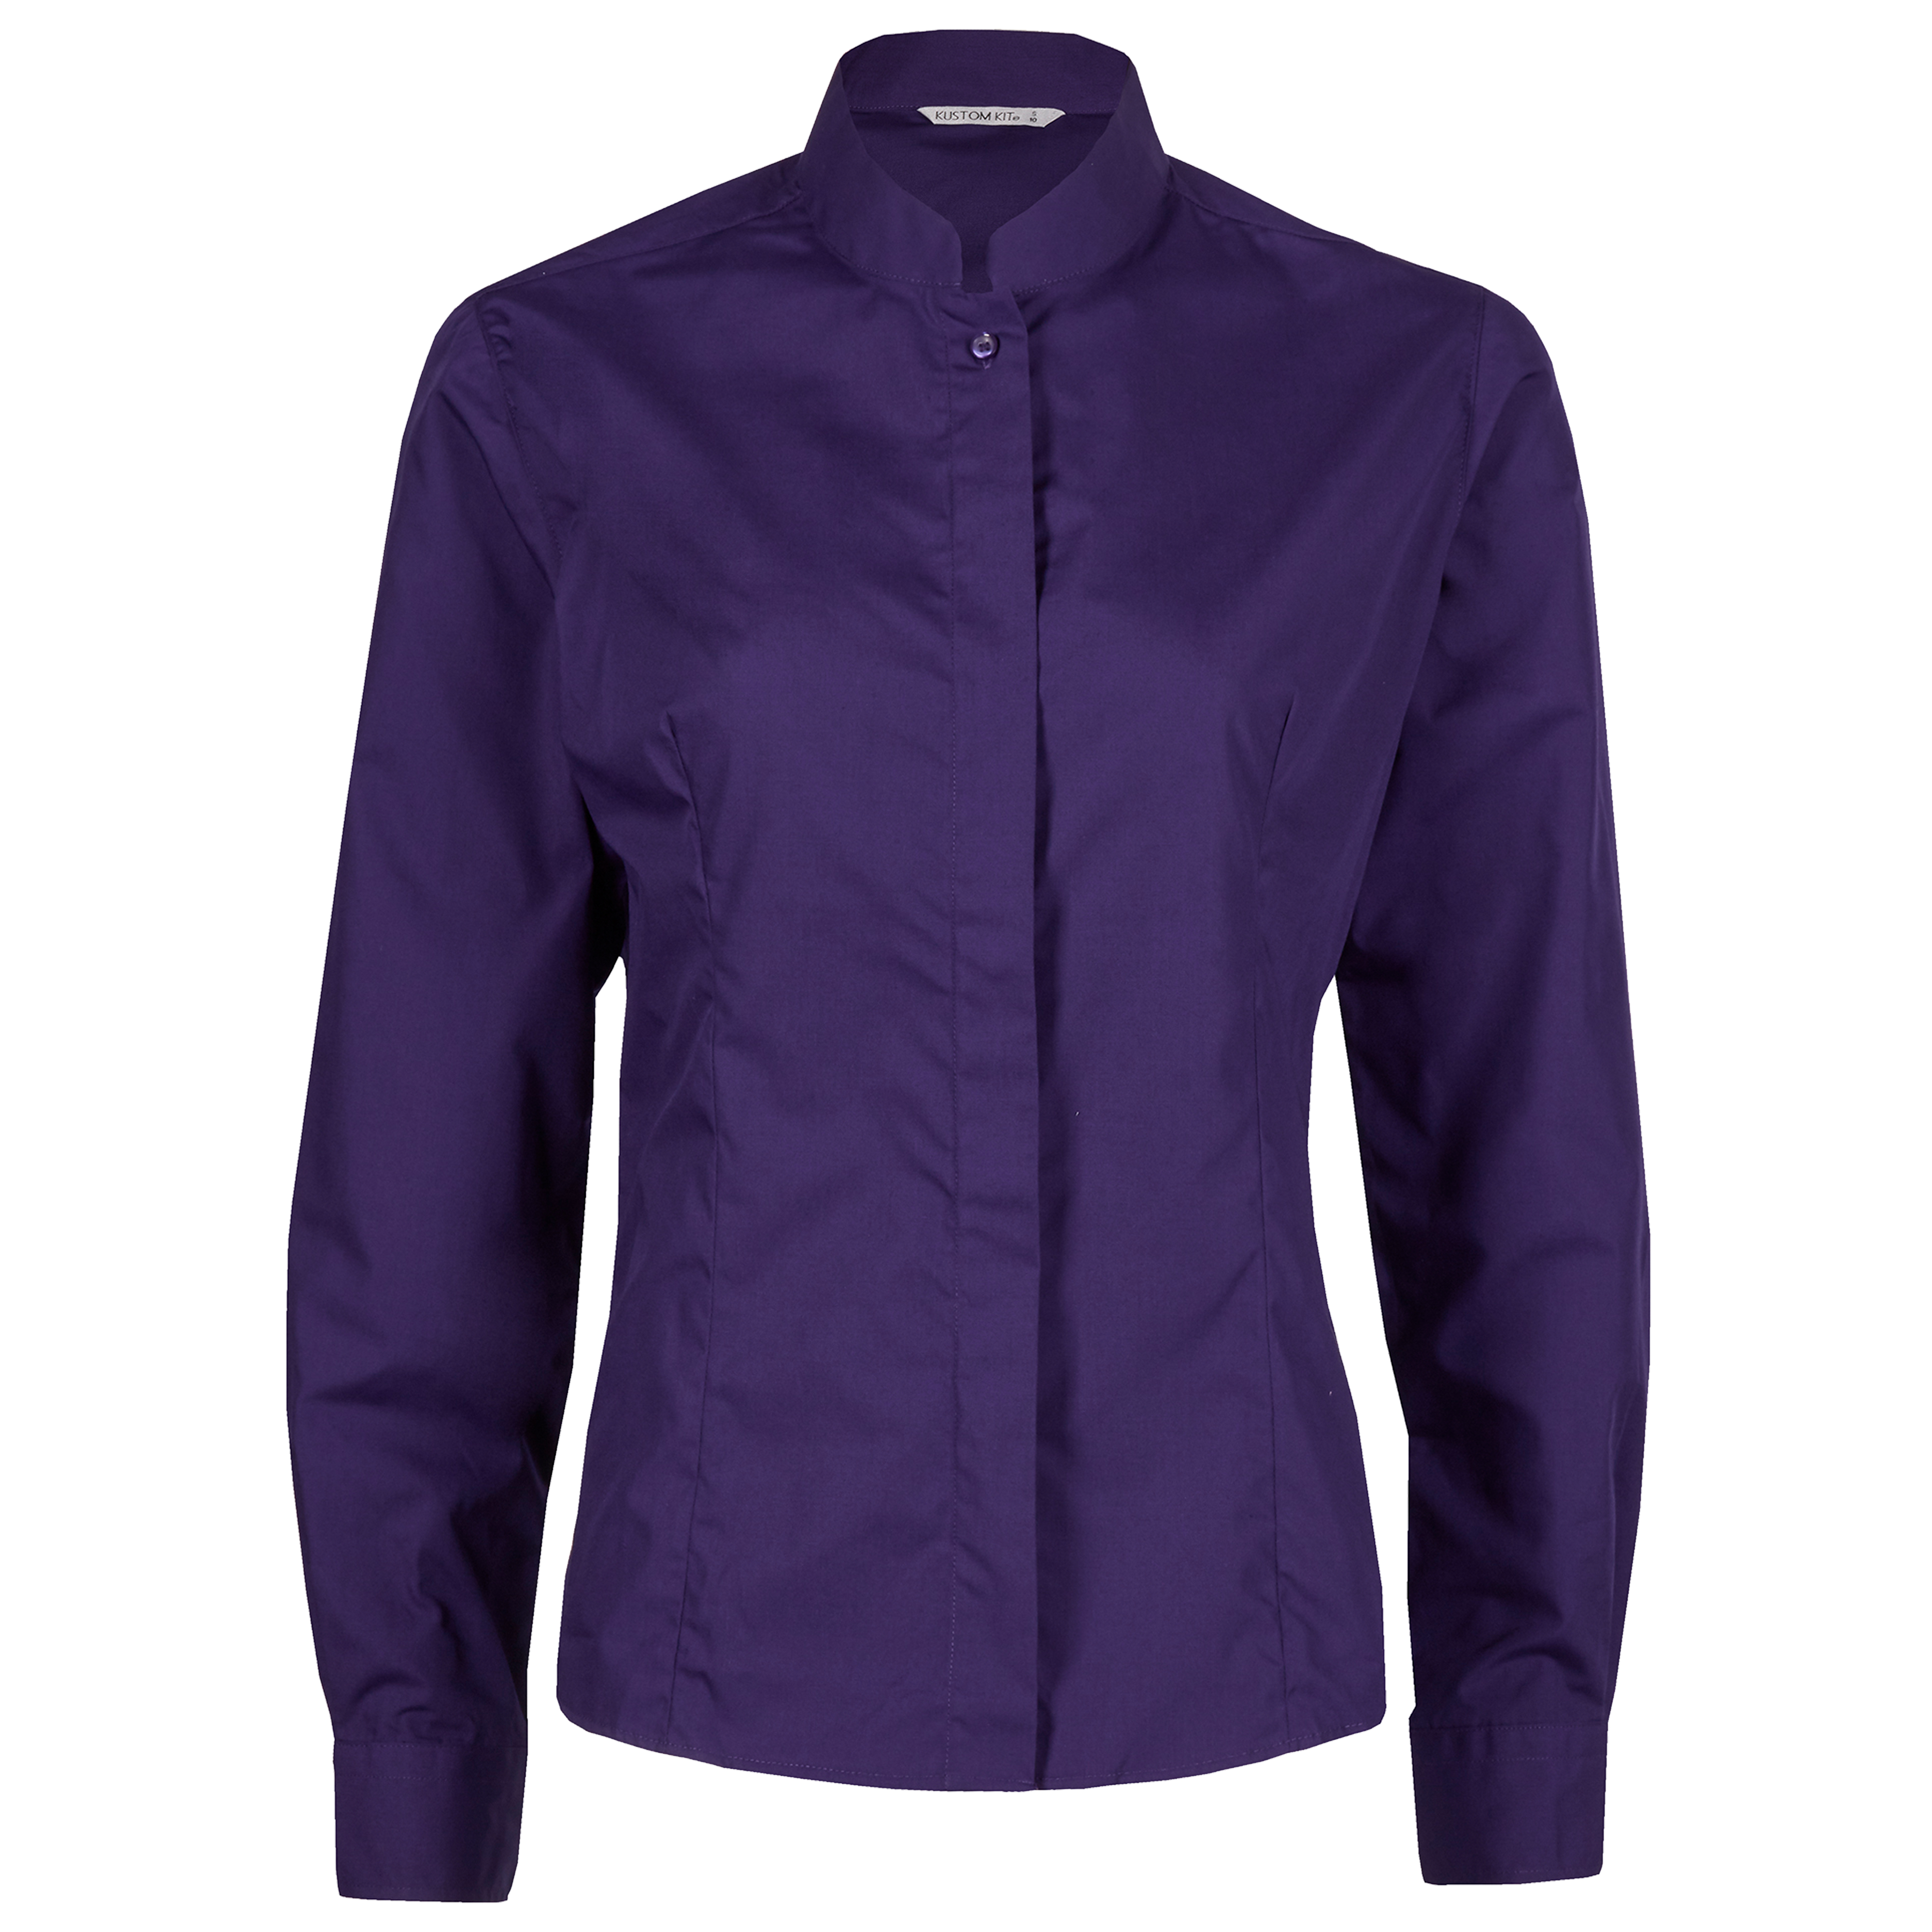 Wholesale Cheap Custom Design Long Sleeve Round Collar Shirt Fast